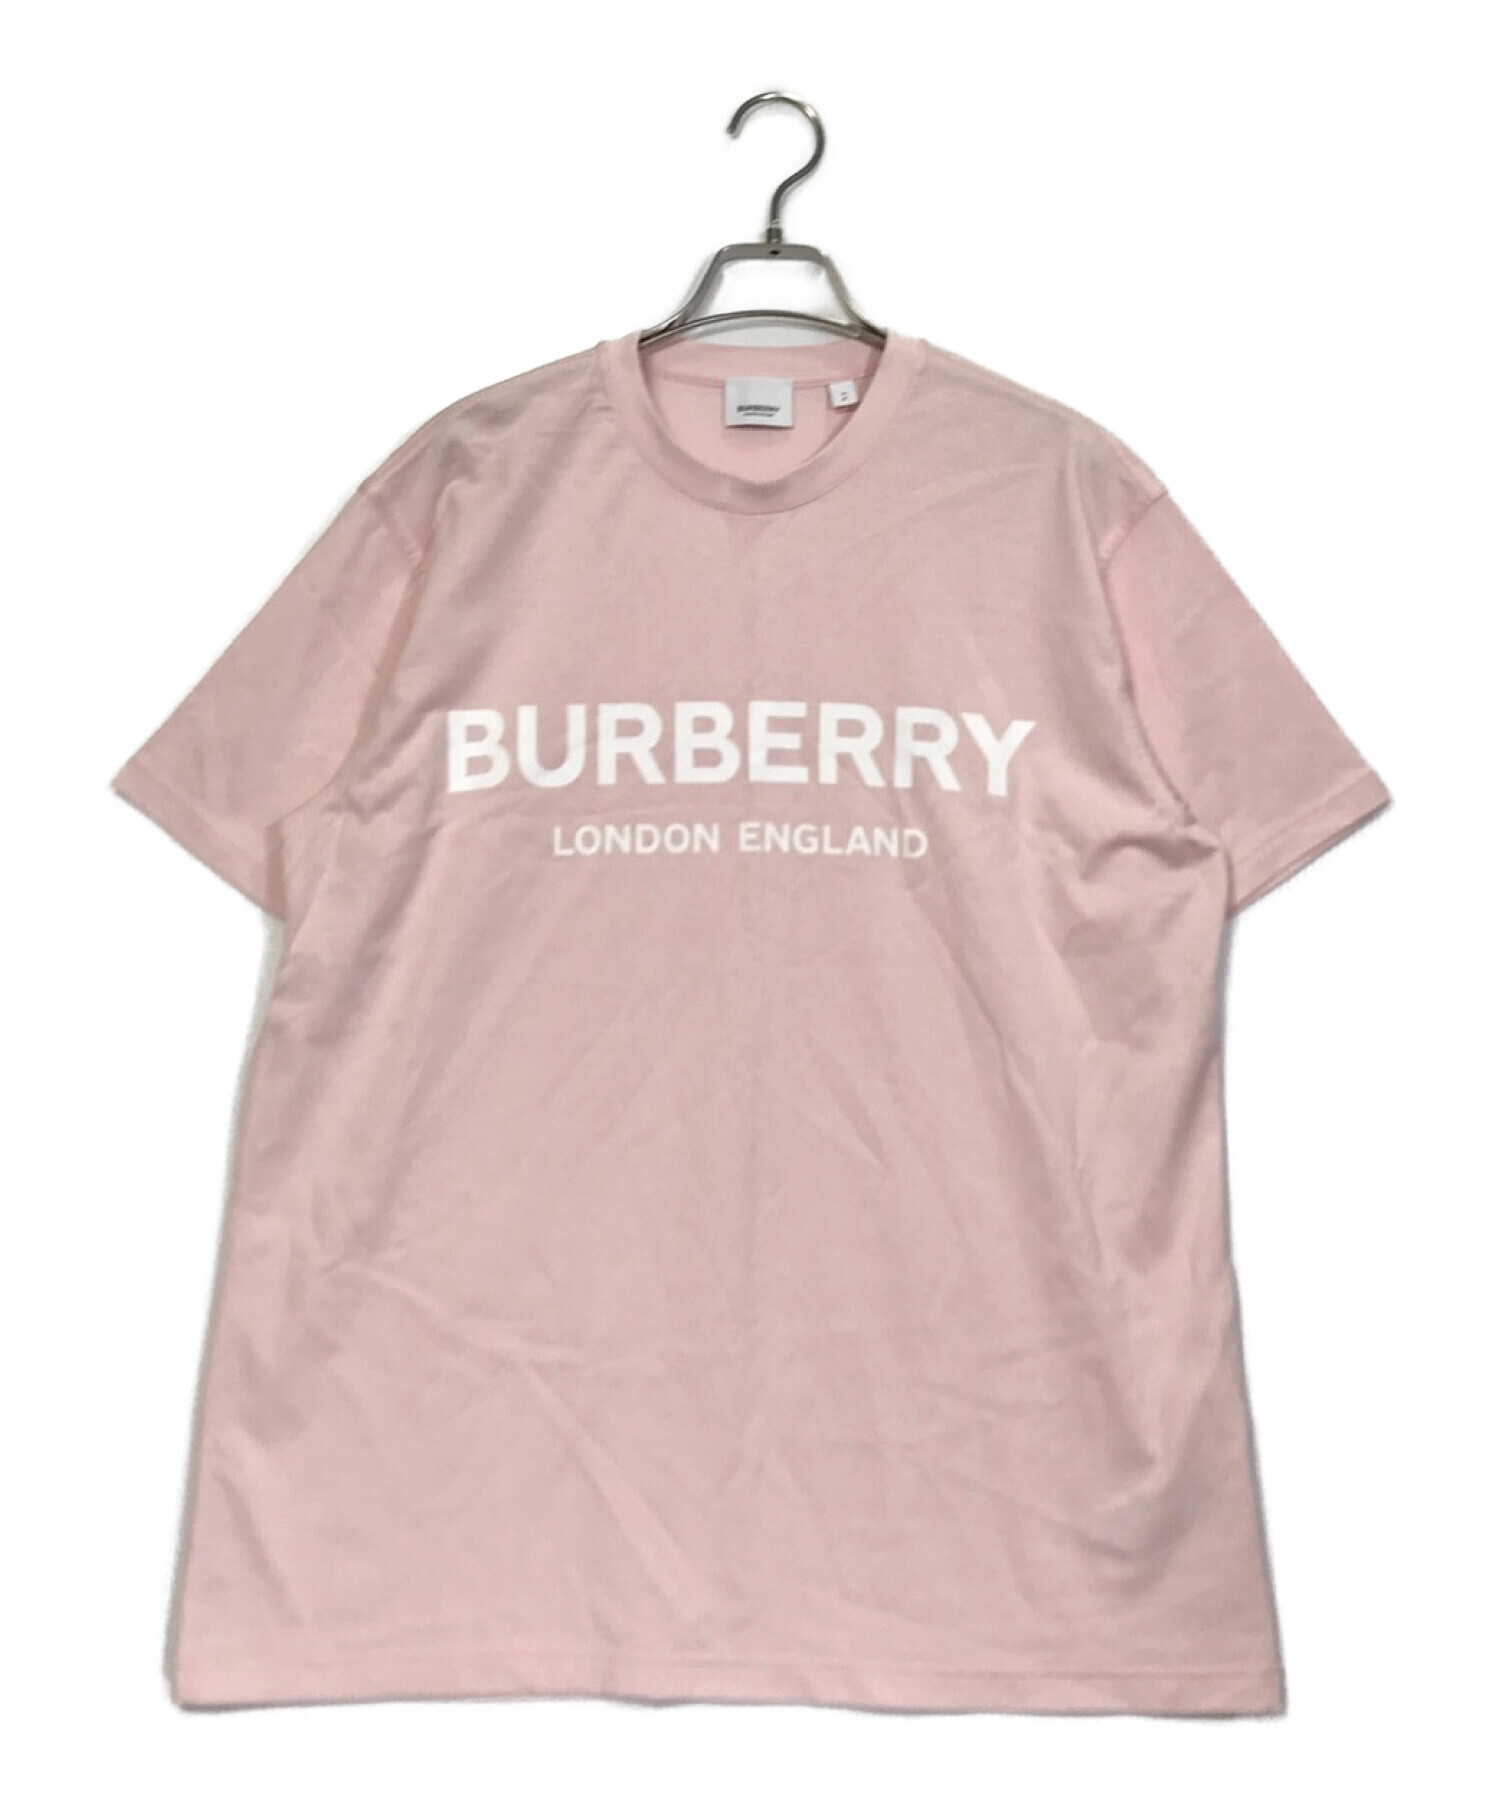 BURBERRY LONDON ENGLAND (バーバリー ロンドン イングランド) ロゴプリントクルーネックTシャツ ピンク サイズ:S